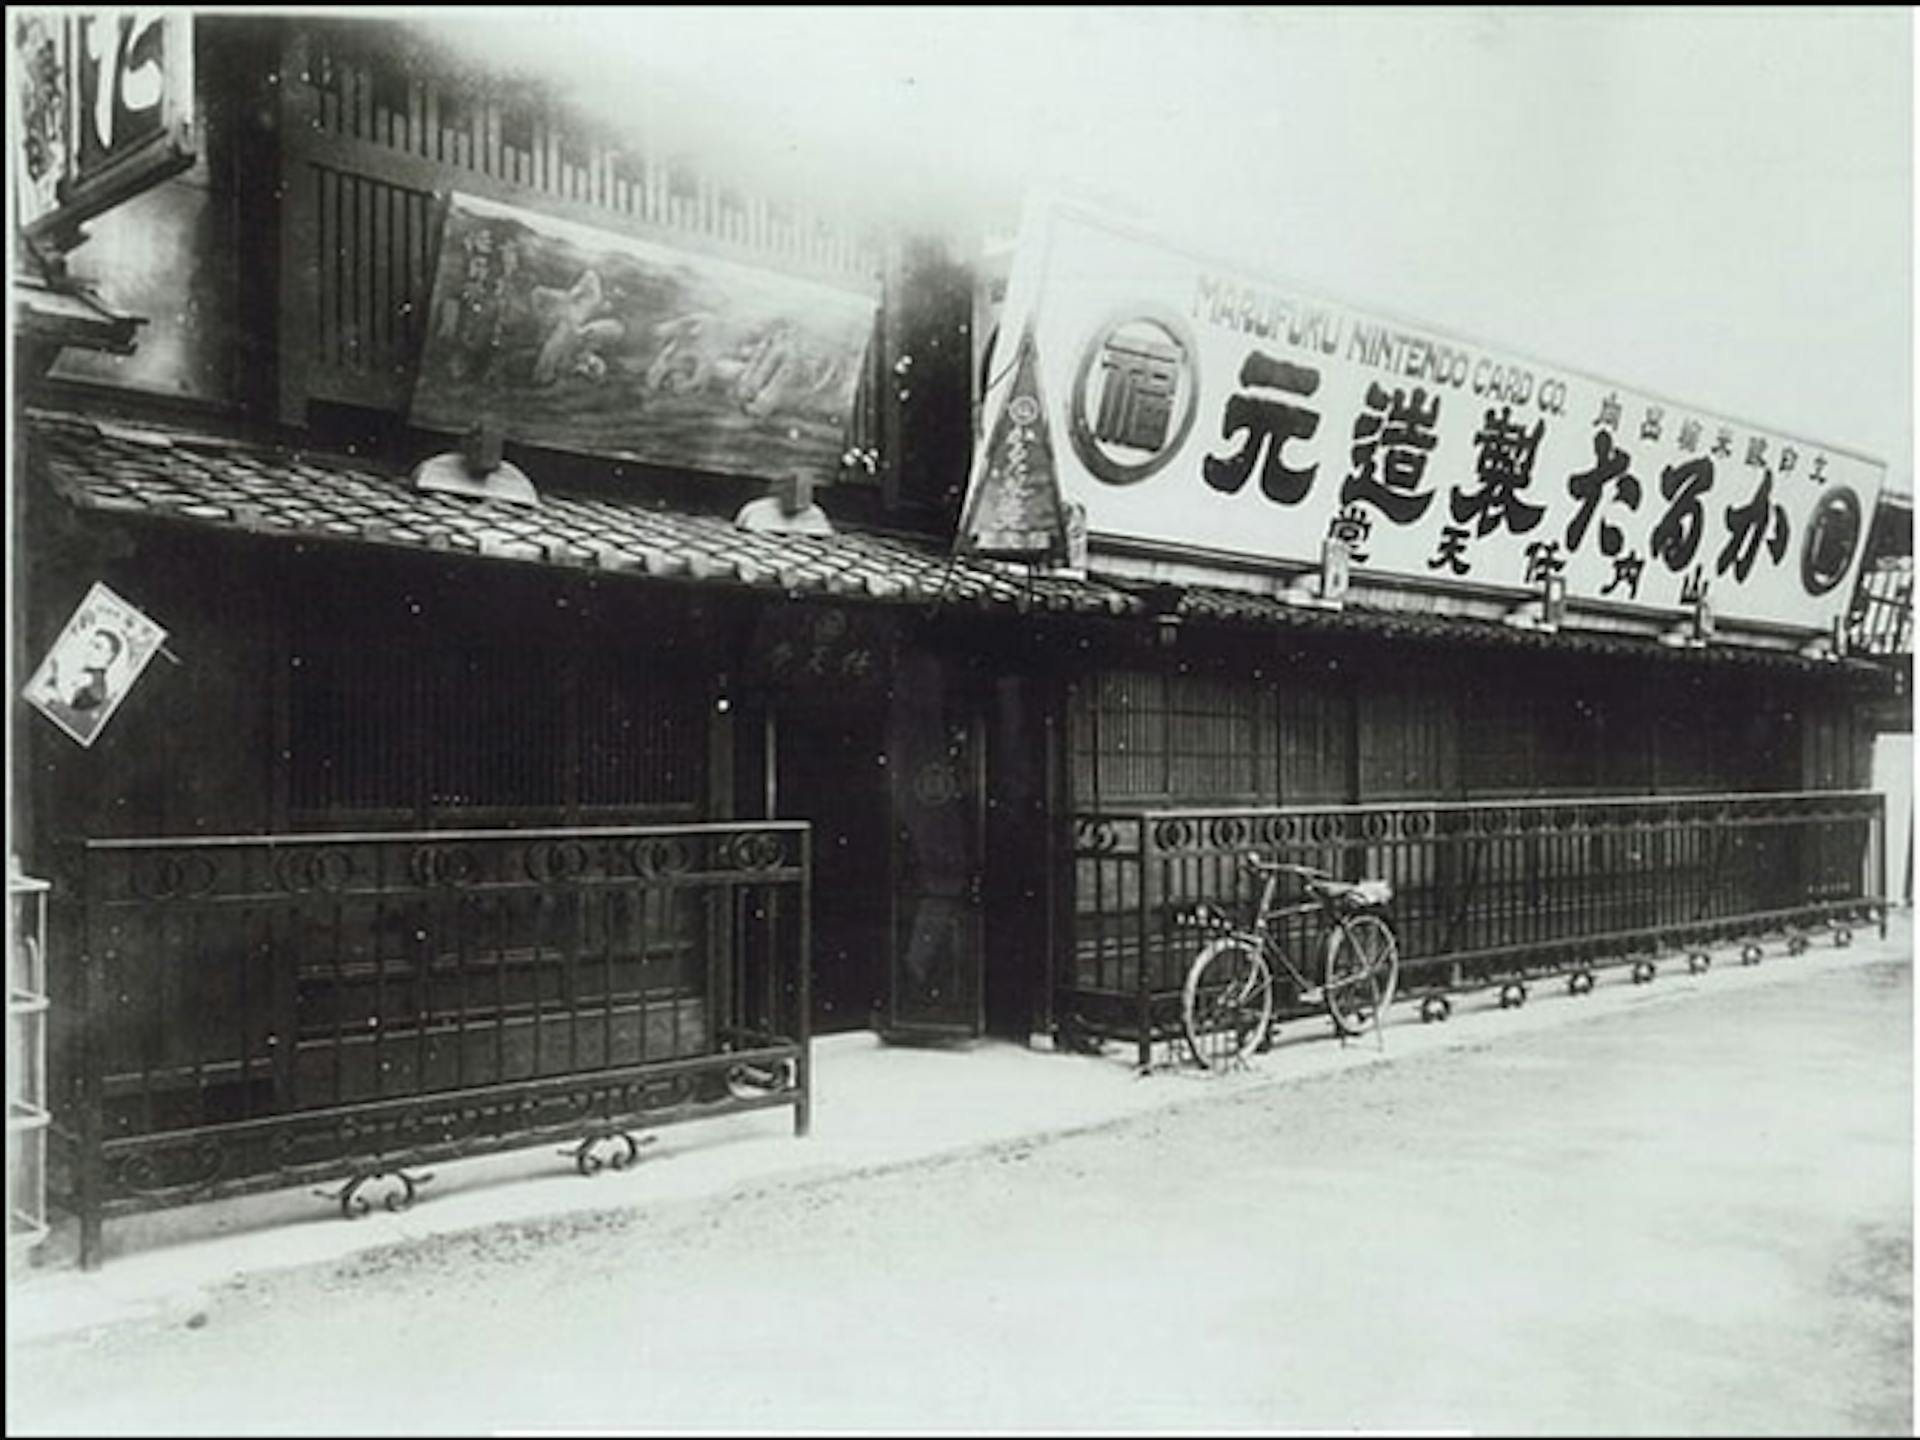 Nintendo’s original headquarters in Kyoto: Source: Wikimedia Commons